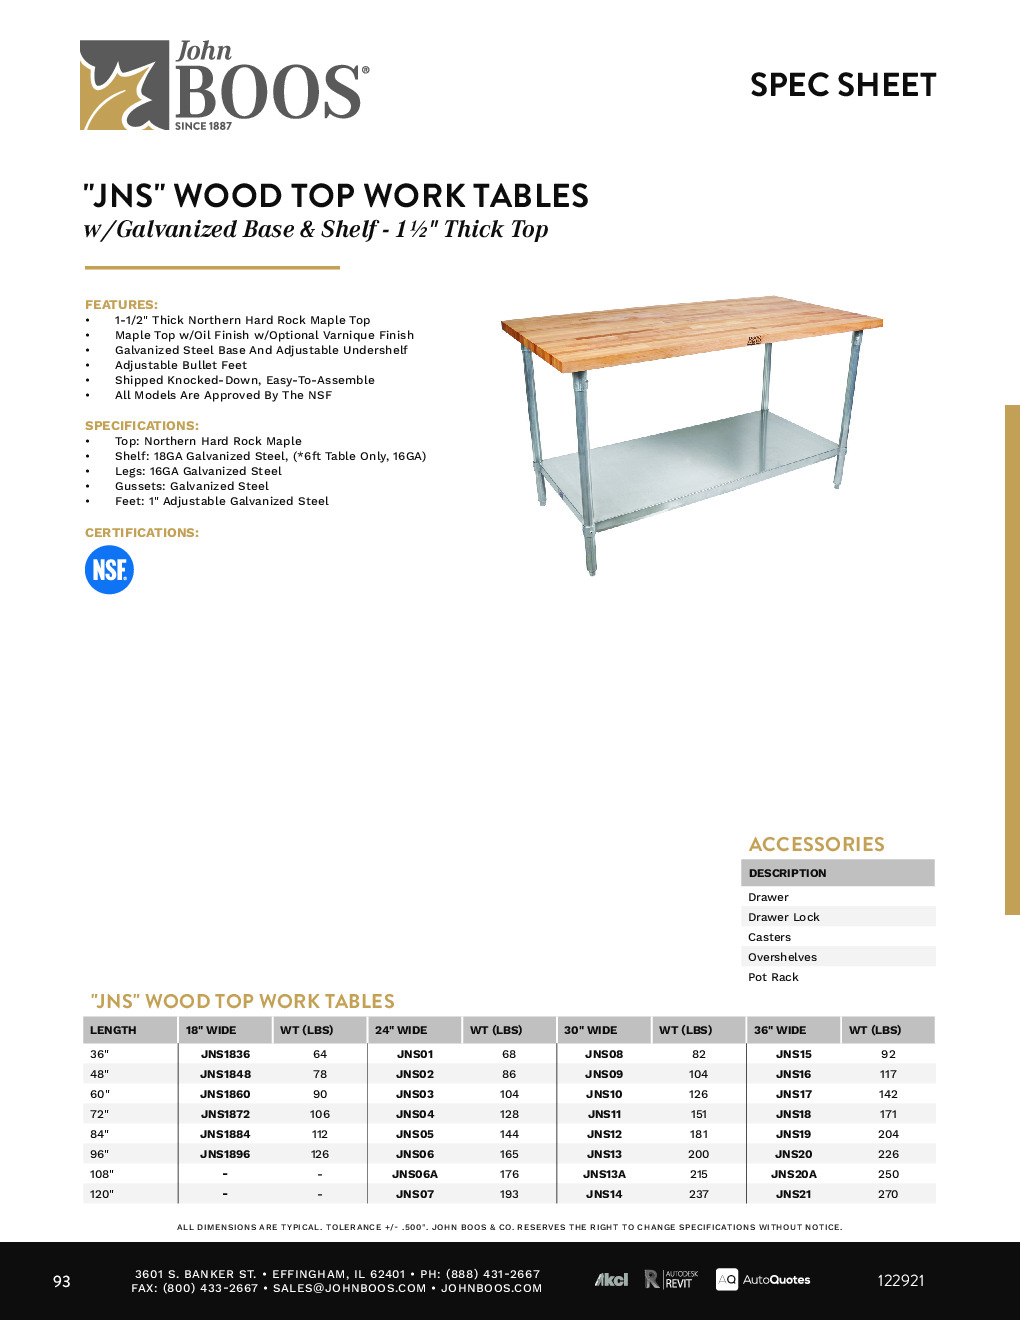 John Boos JNS06-X Wood Top Work Table